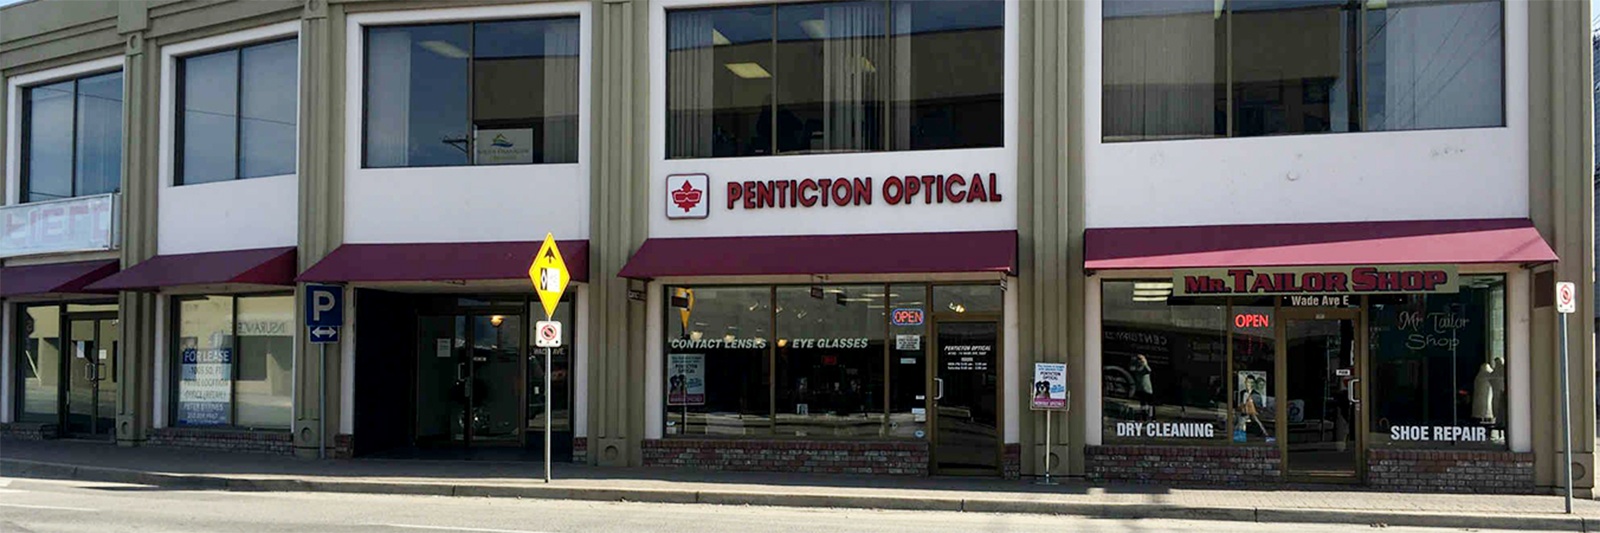 Contact Penticton Optical Store - Custom Eyewear, Vision Testing Services, Prescription Eye Glasses